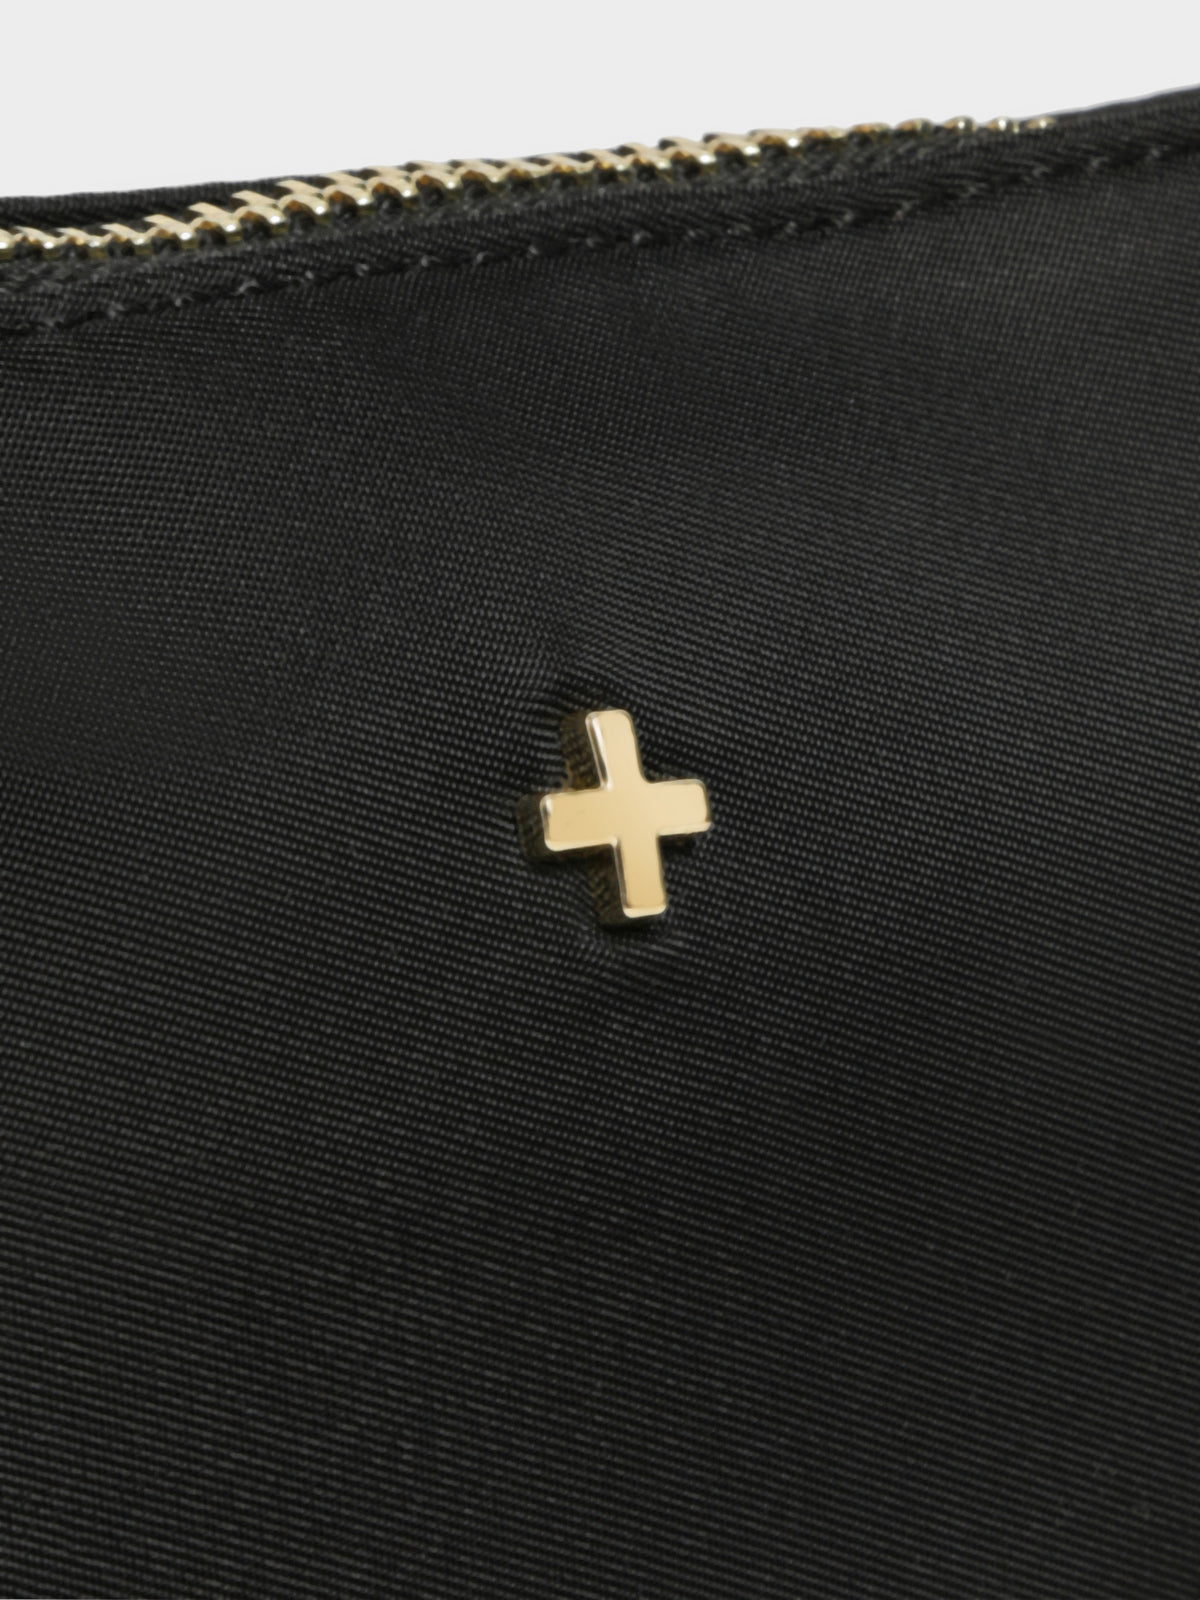 Phoenix Cross-Body Bag in Black